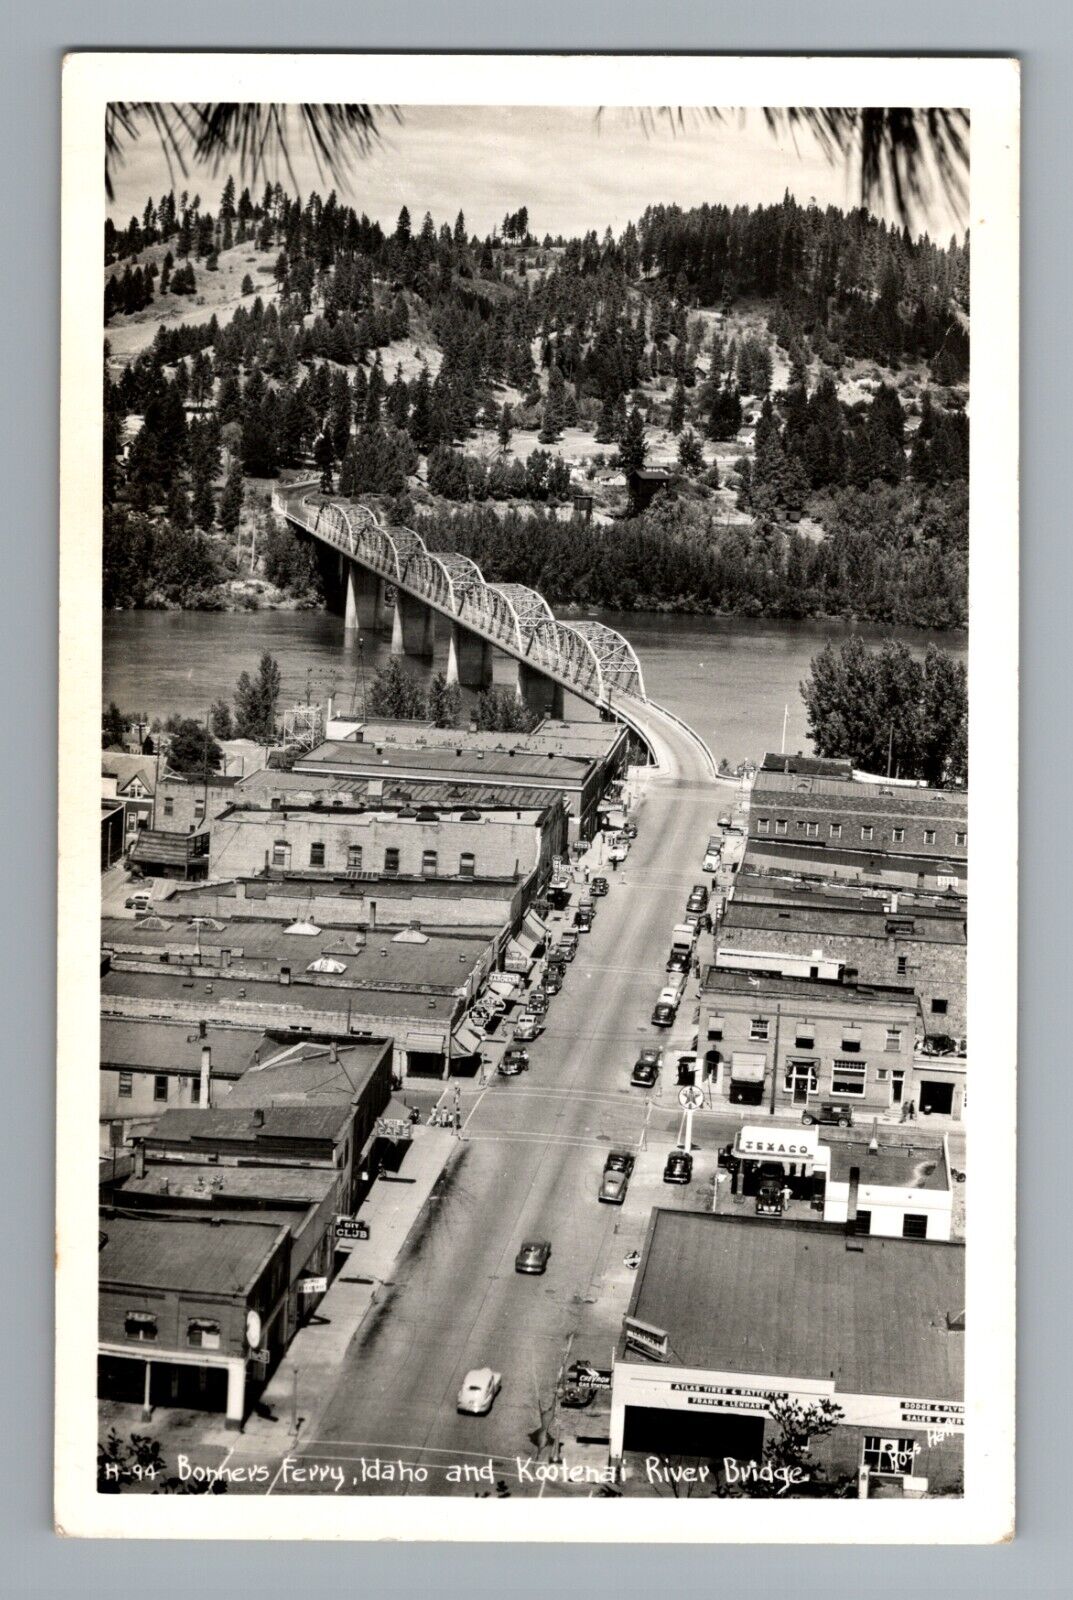 1950s Bonners Ferry Idaho Kootenai River Bridge Real Photo Postcard 3.5x5.5 RPPC